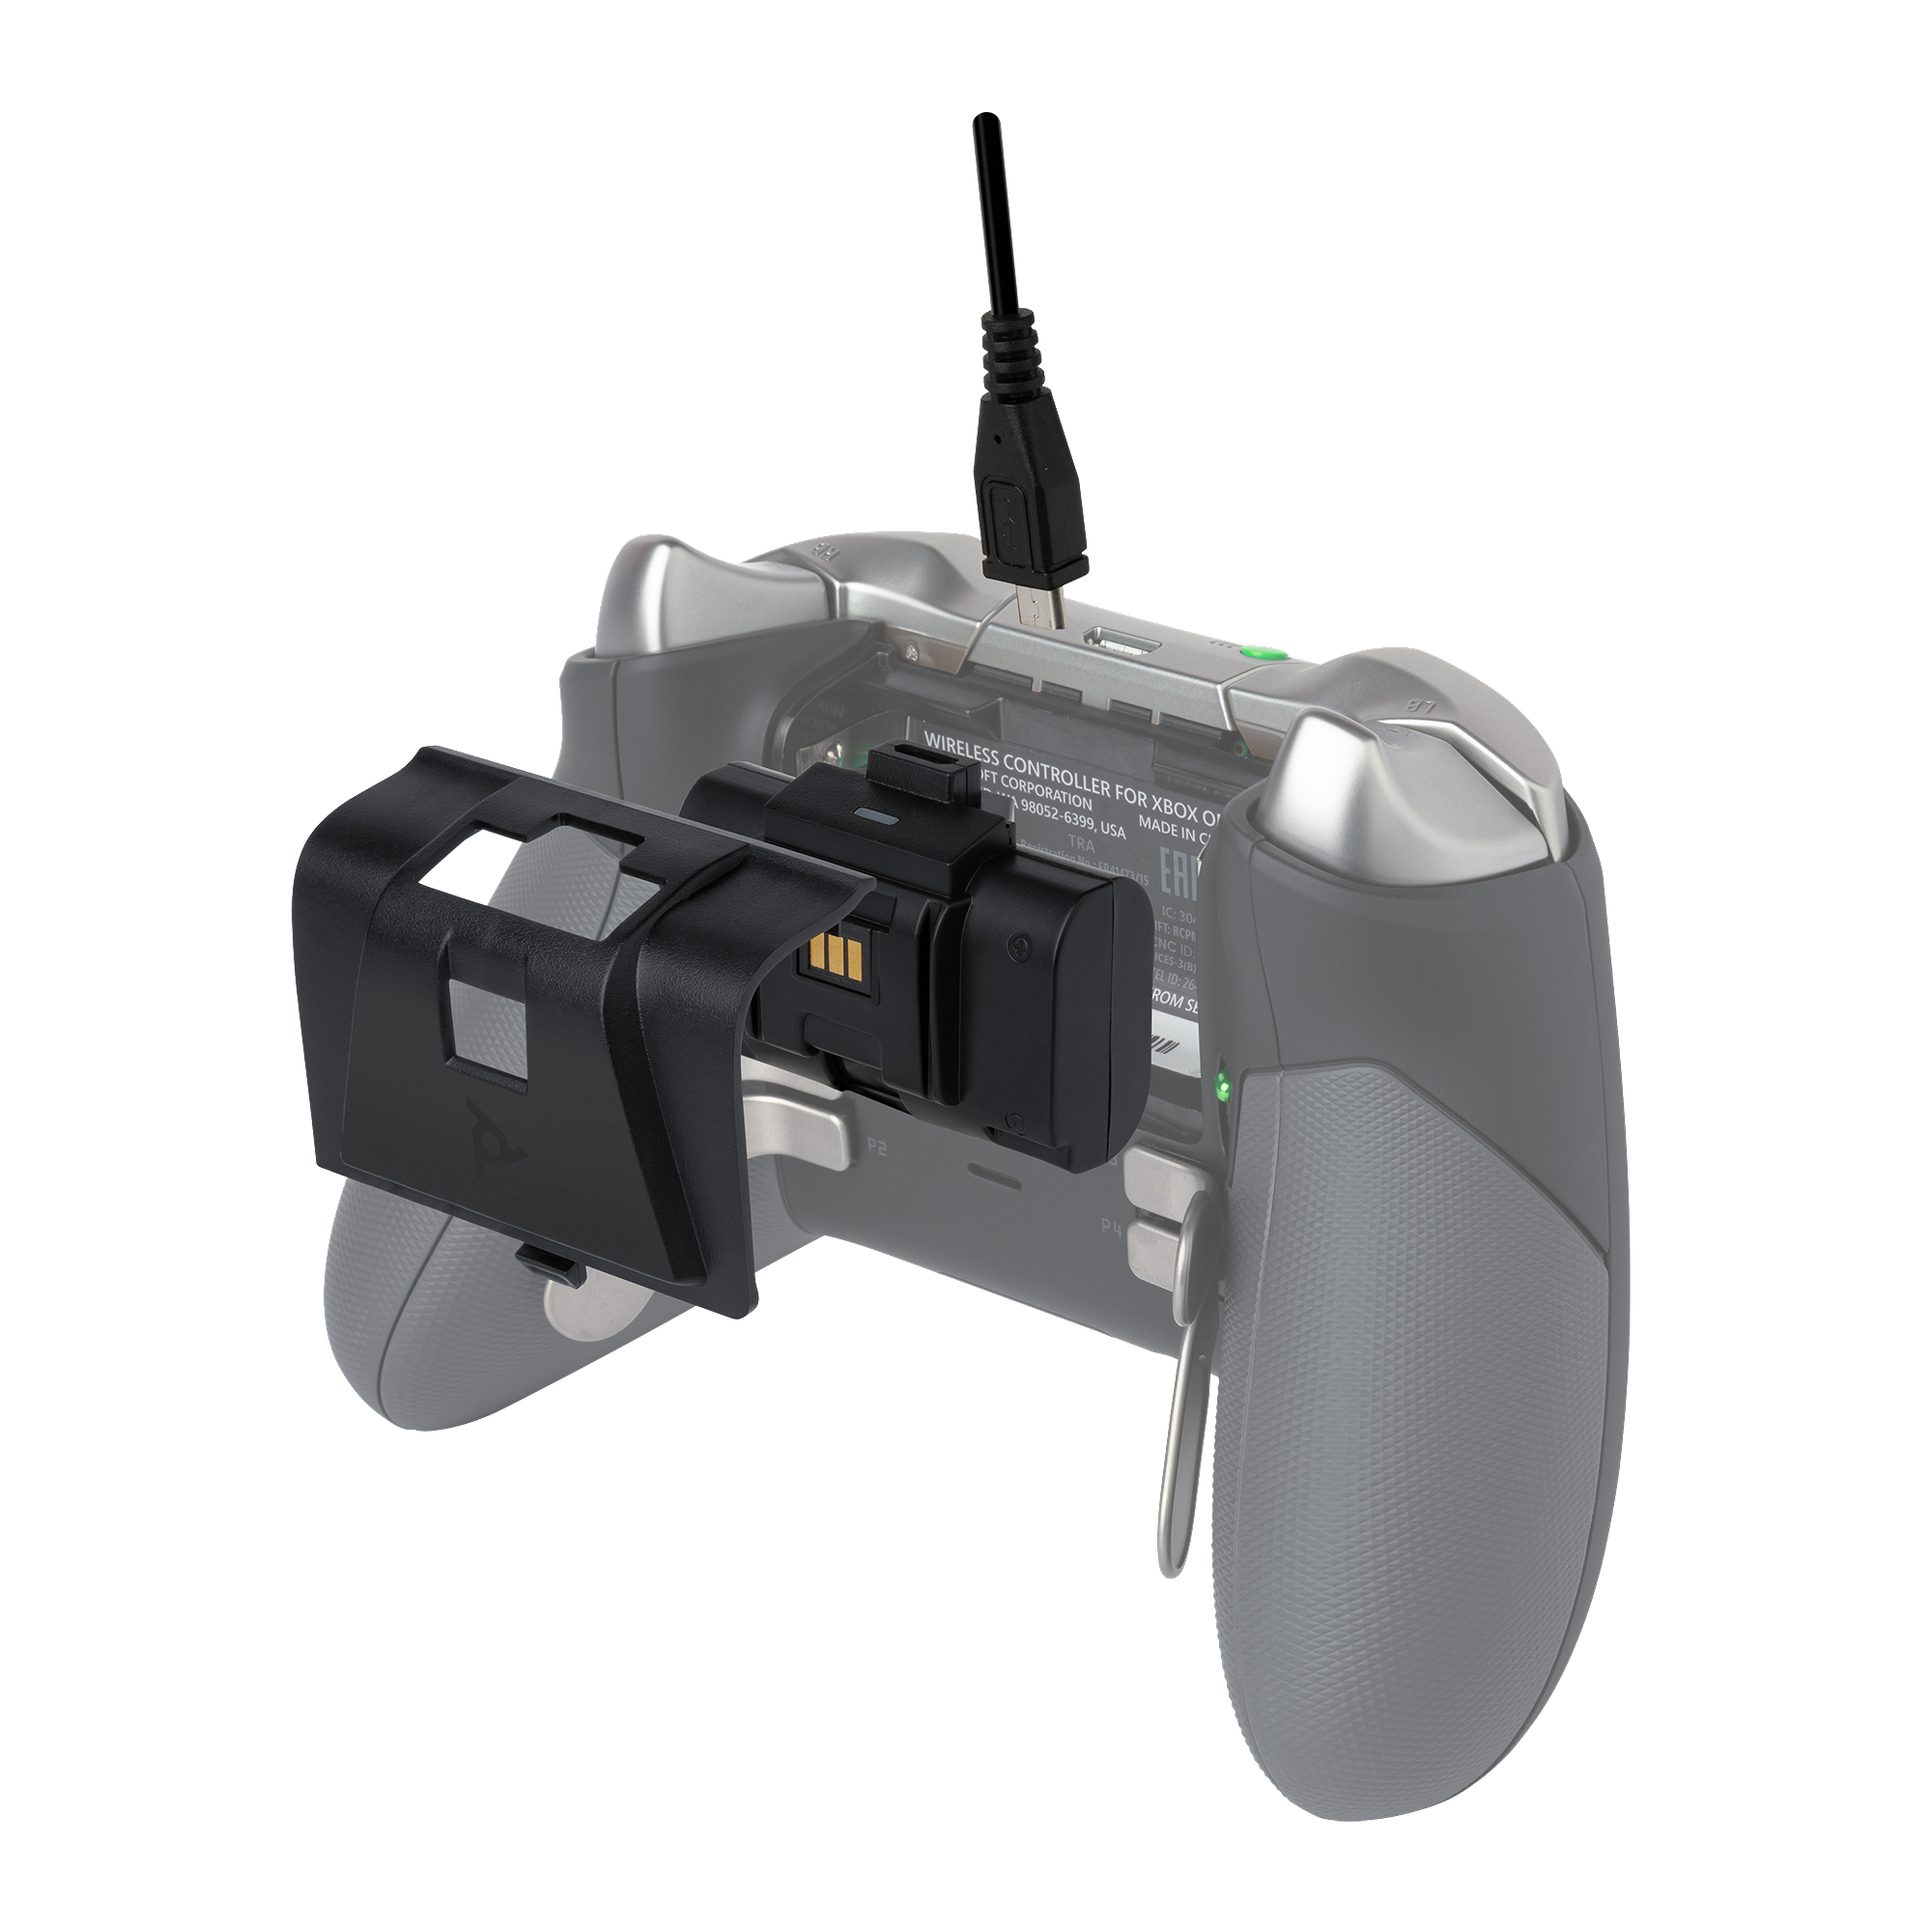 PDP LLC Zubehör Xbox-Serie Gaming Schwarz Kit, Charge für X|S, Play PDP 